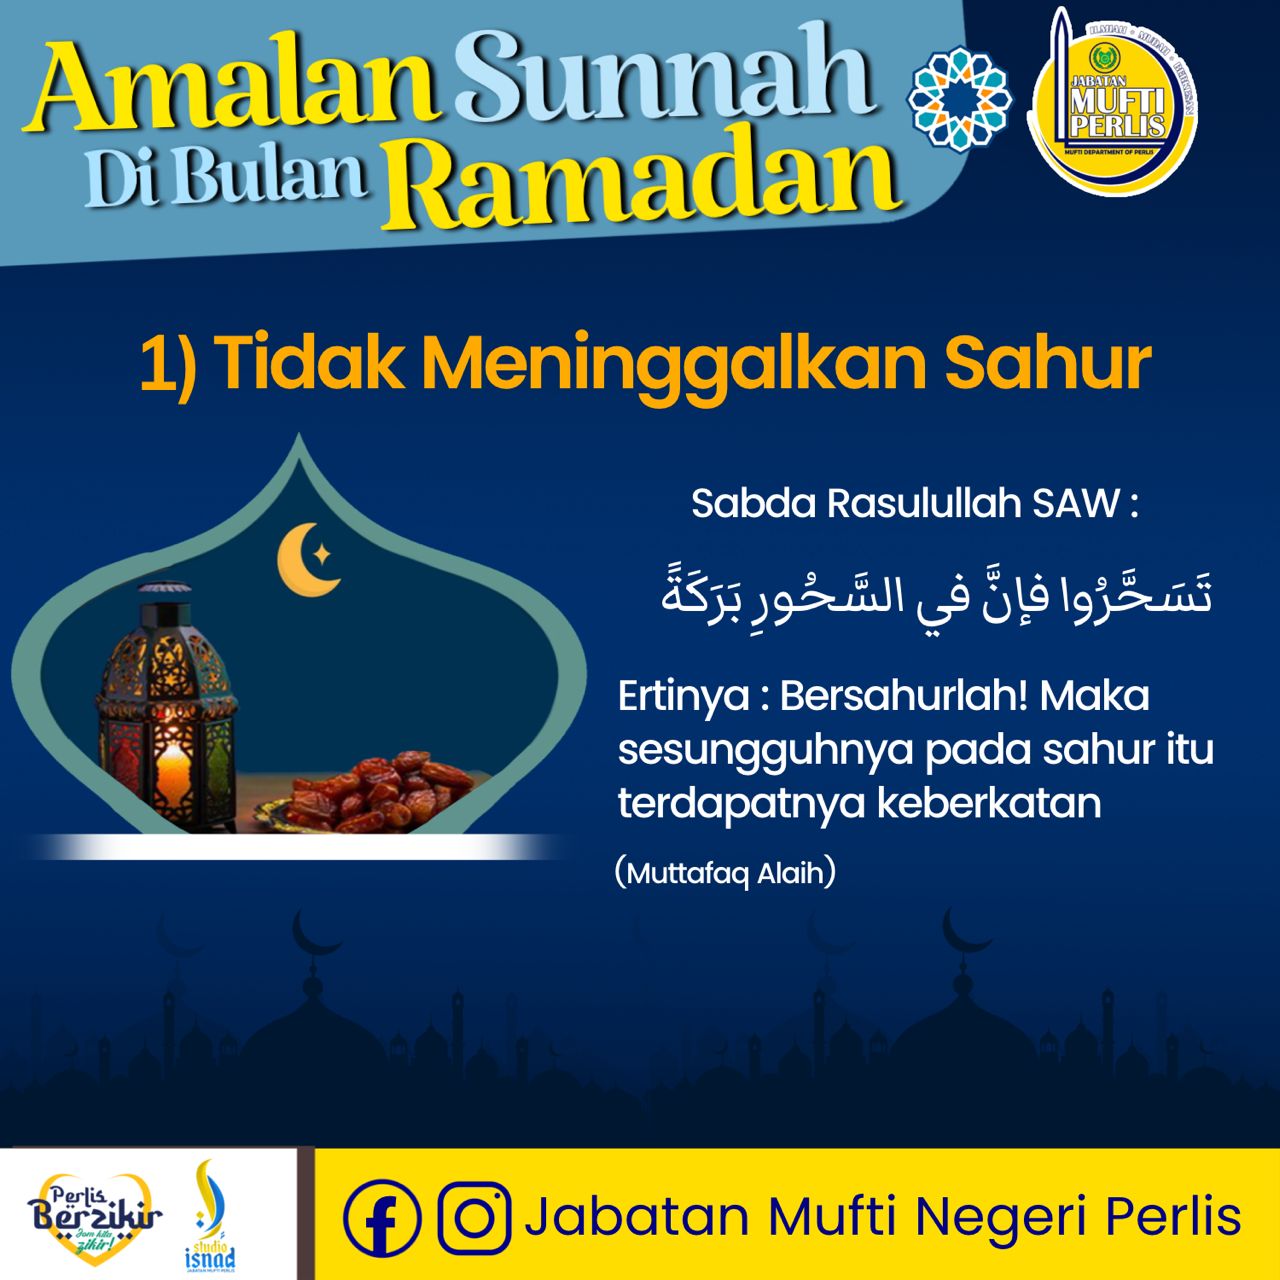 amalan_sunnah_bulan_ramadan_1.jpg